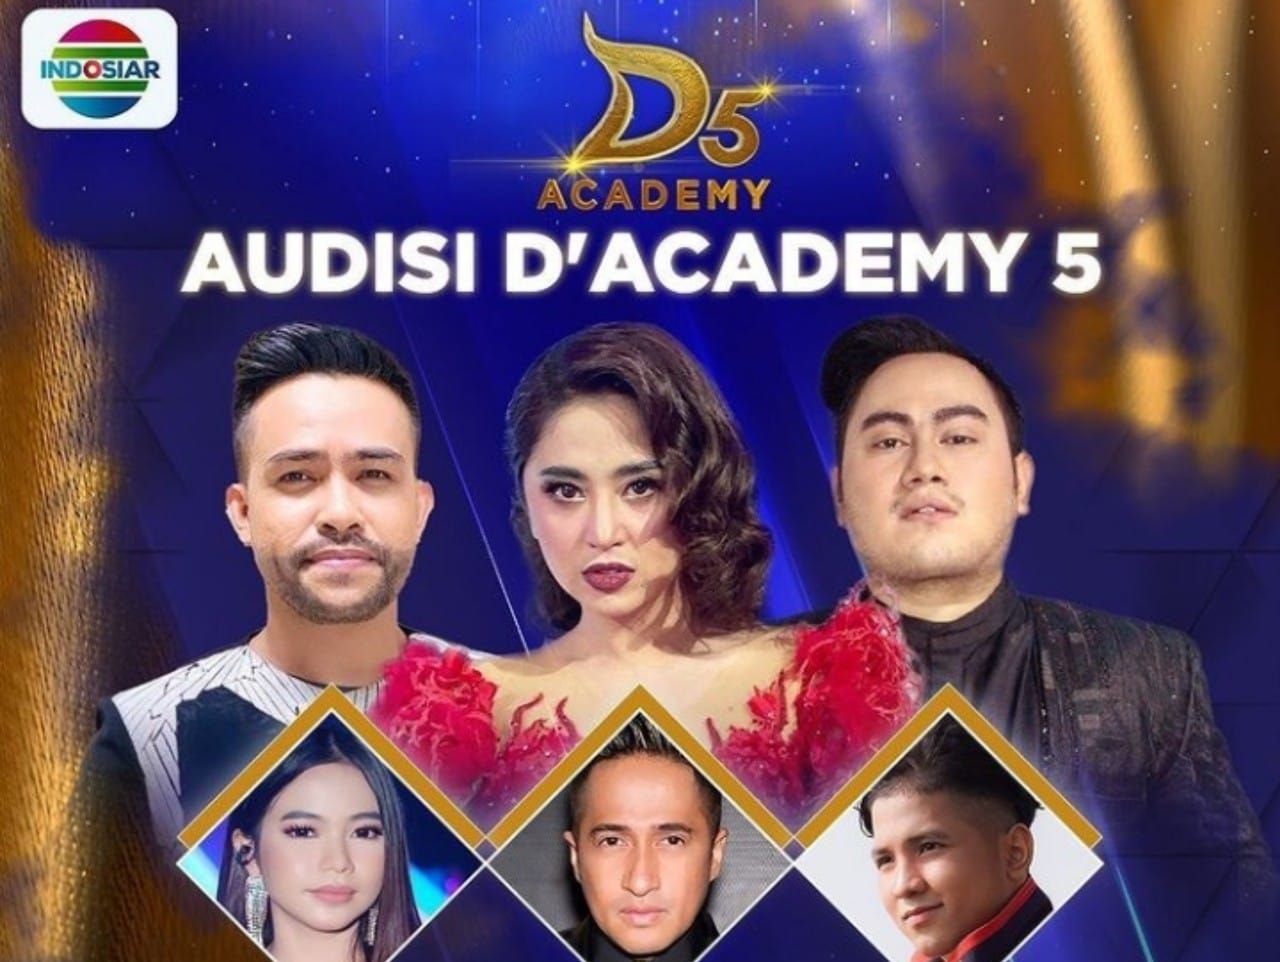 Jadwal TV Indosiar Selasa 9 Agustus 2022: Saksikan Keseruan Final Audisi D Academy 5